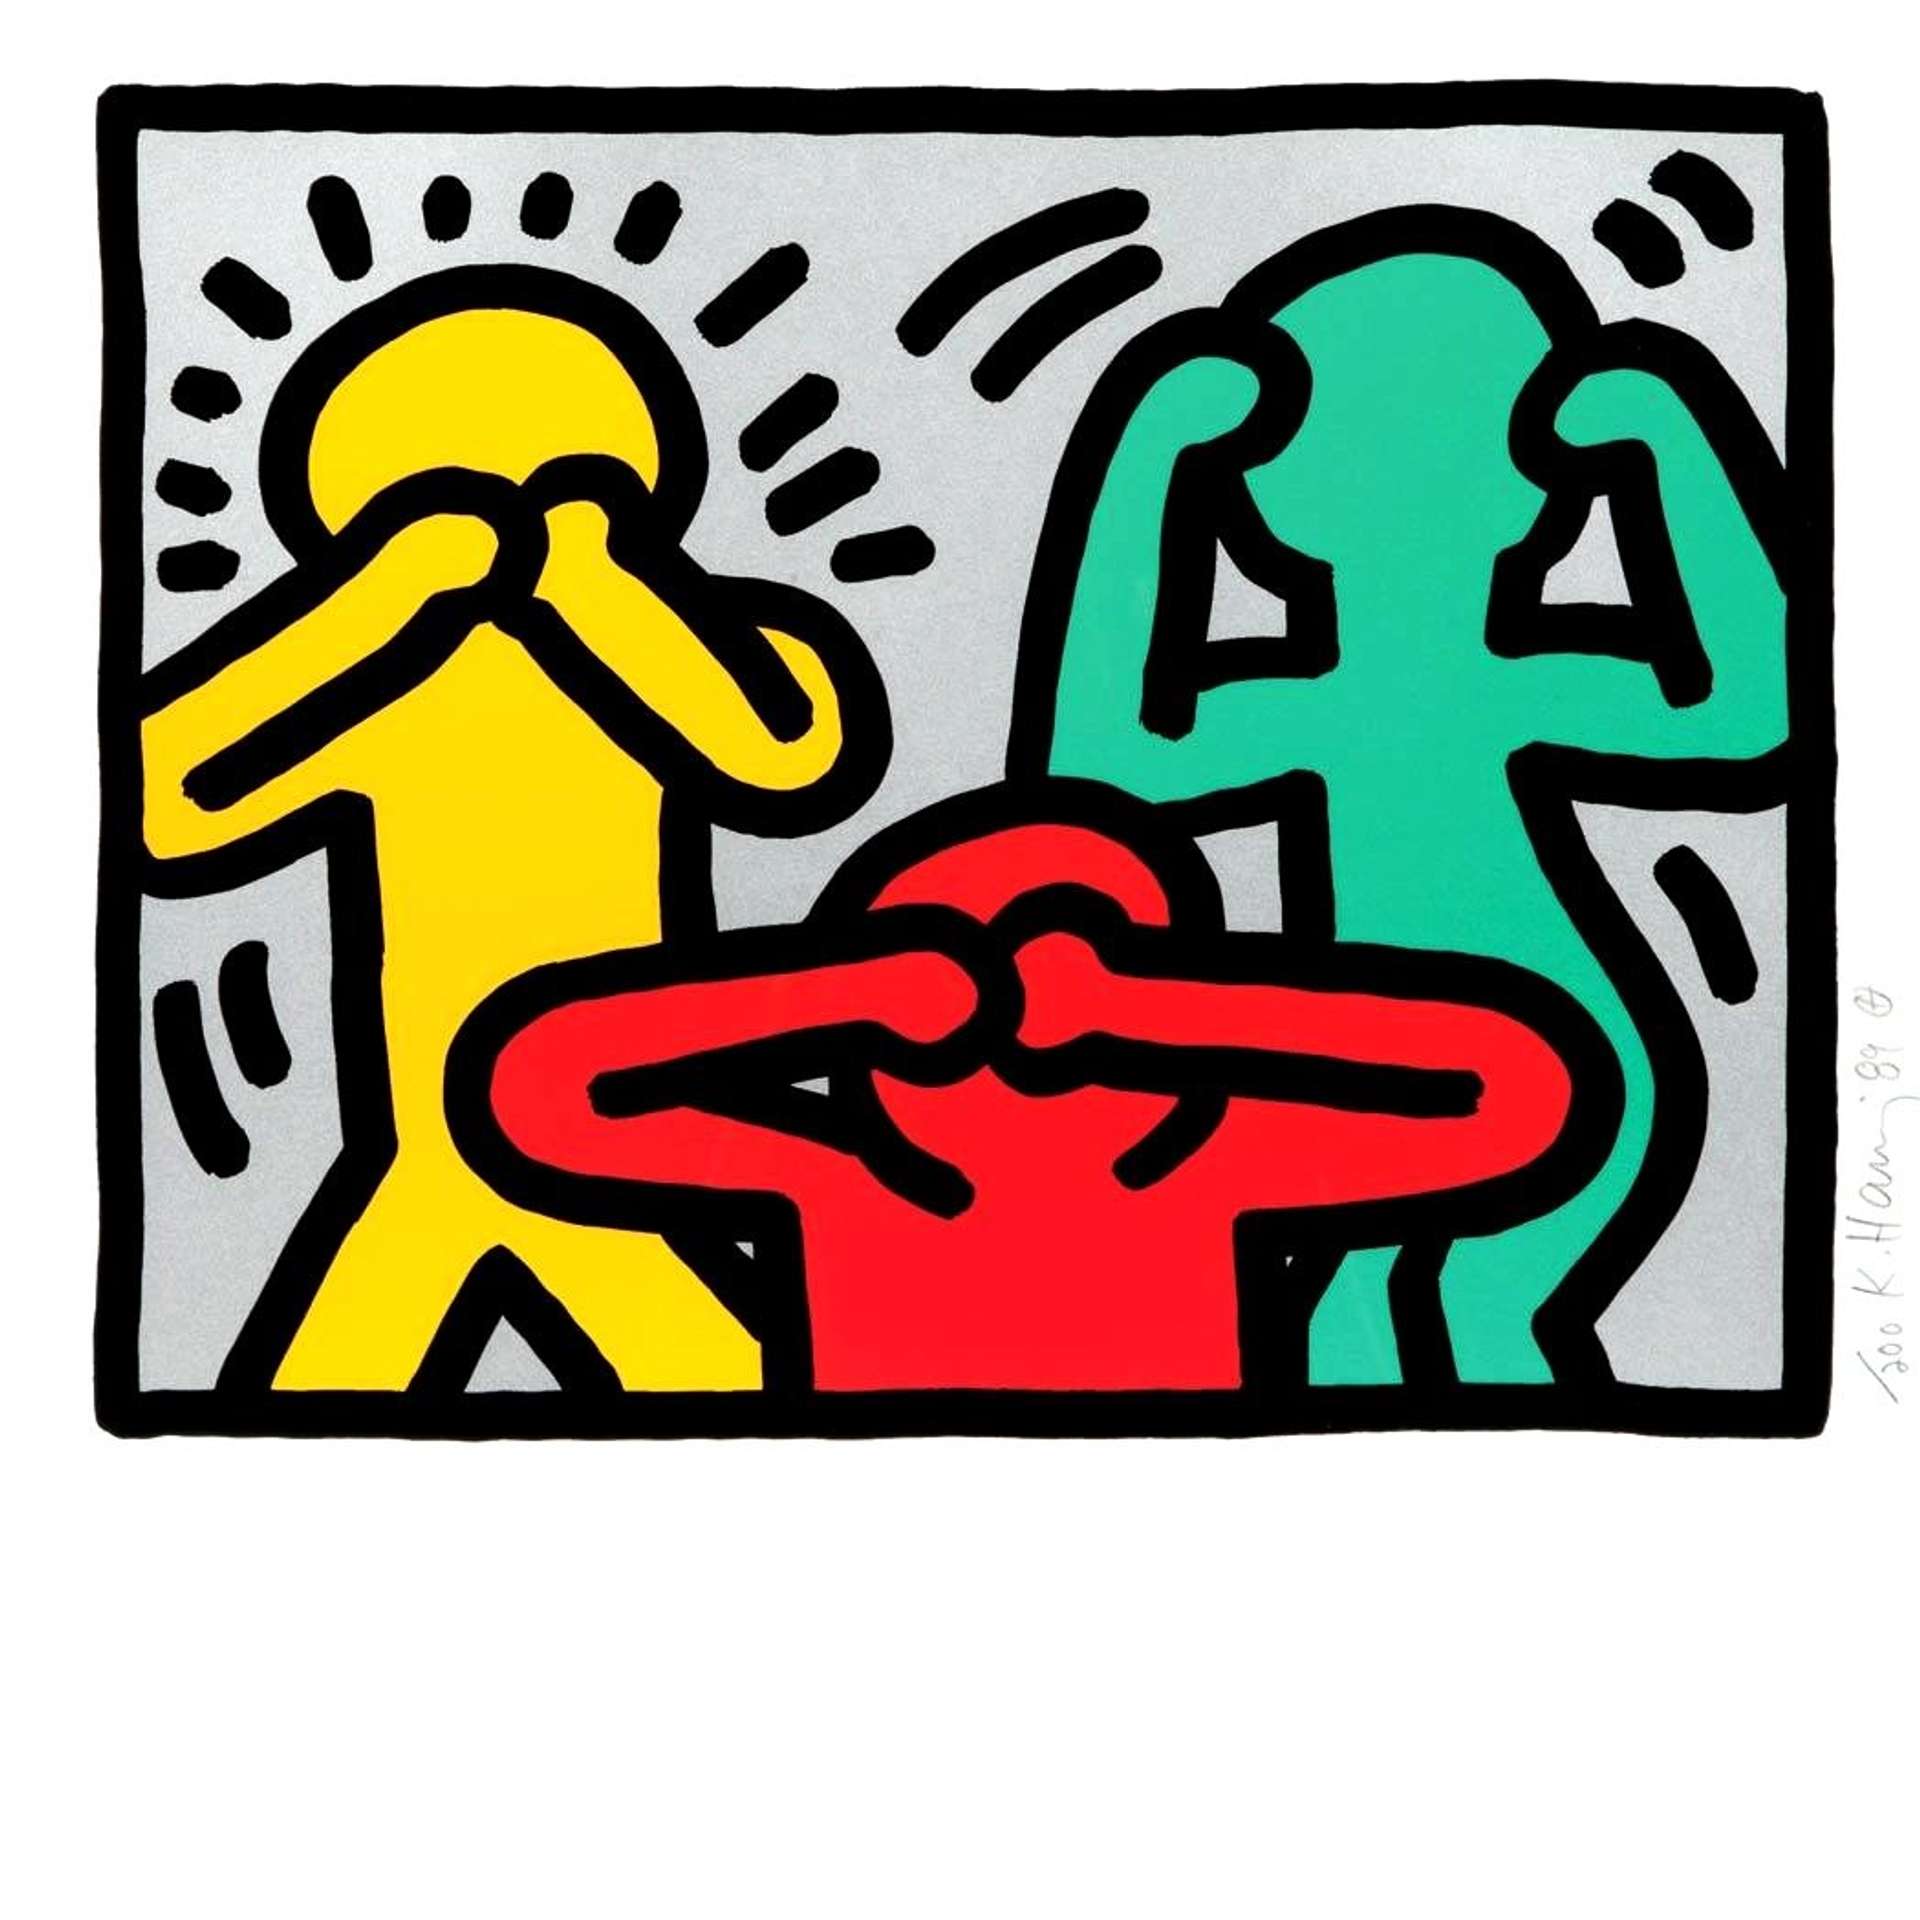 Pop Shop III, Plate II by Keith Haring